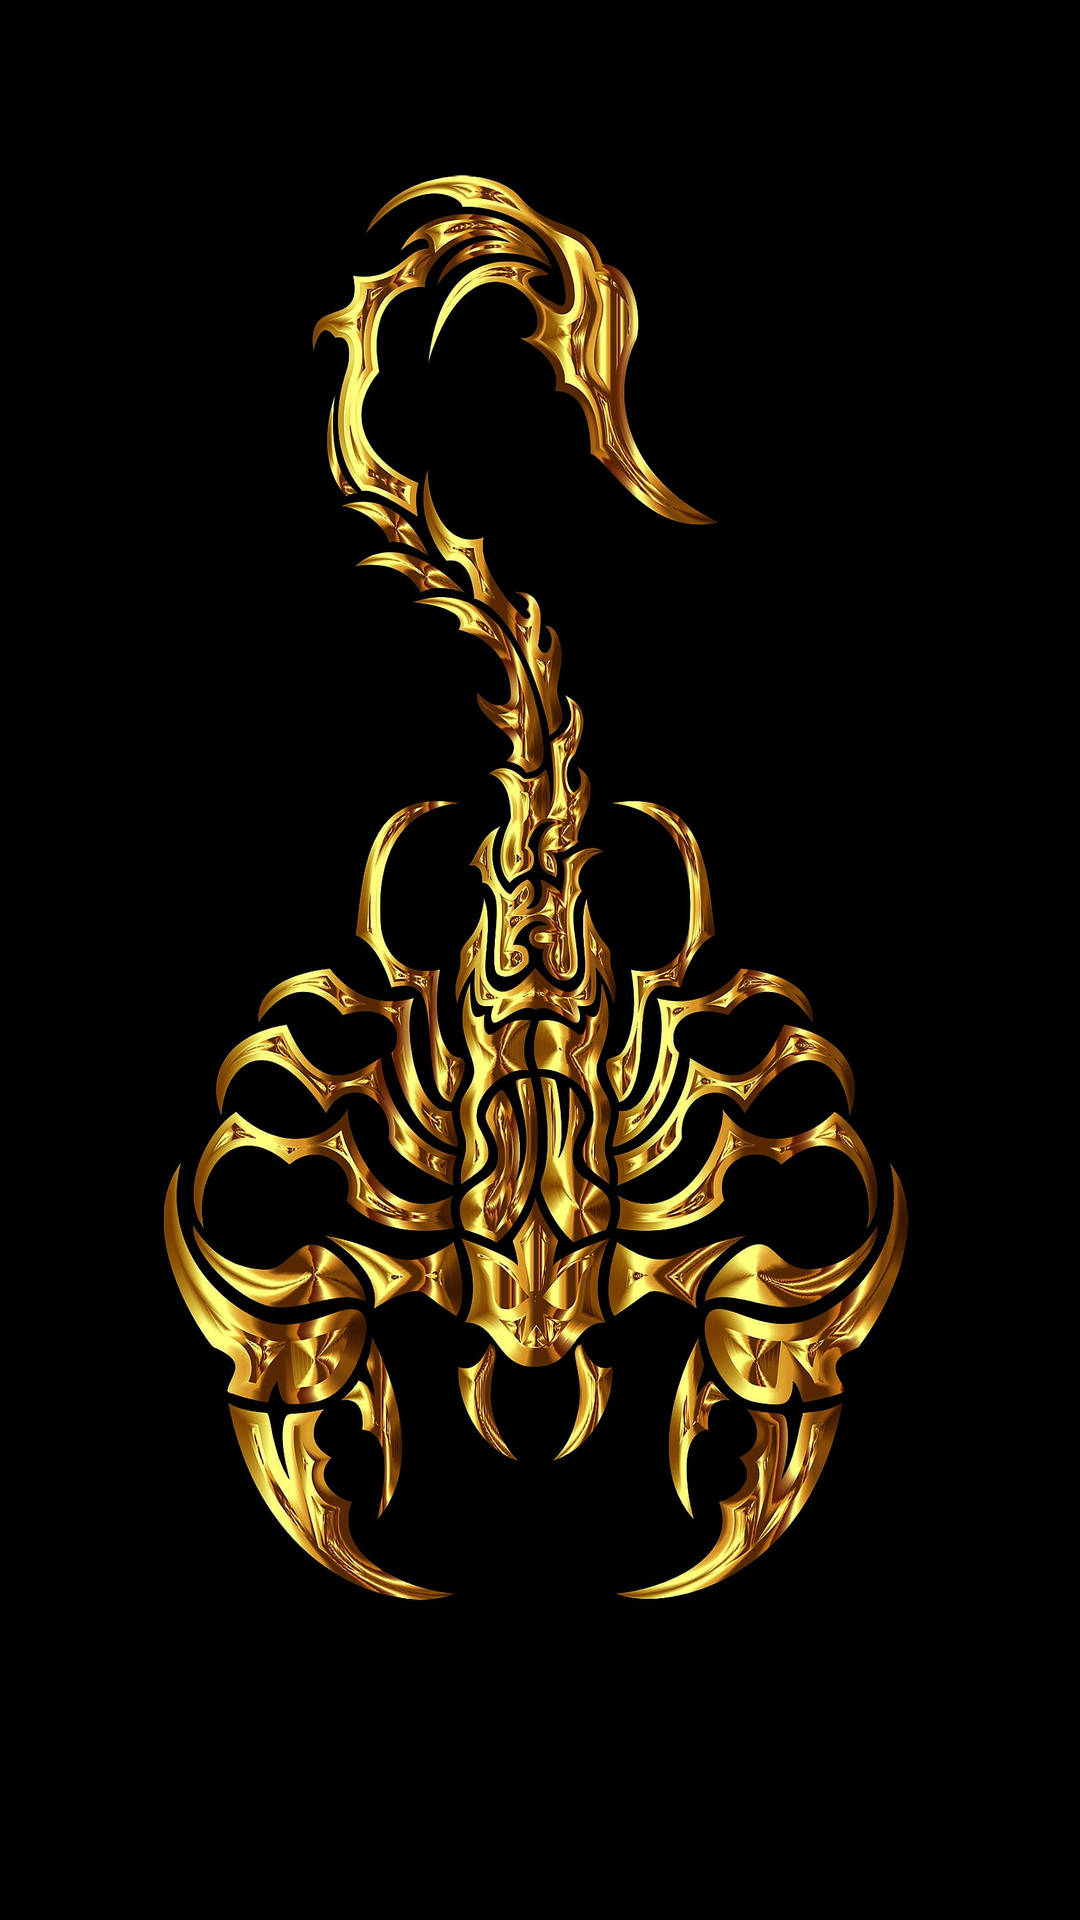 Scorpion Shiny Gold Aesthetic On Black Wallpaper